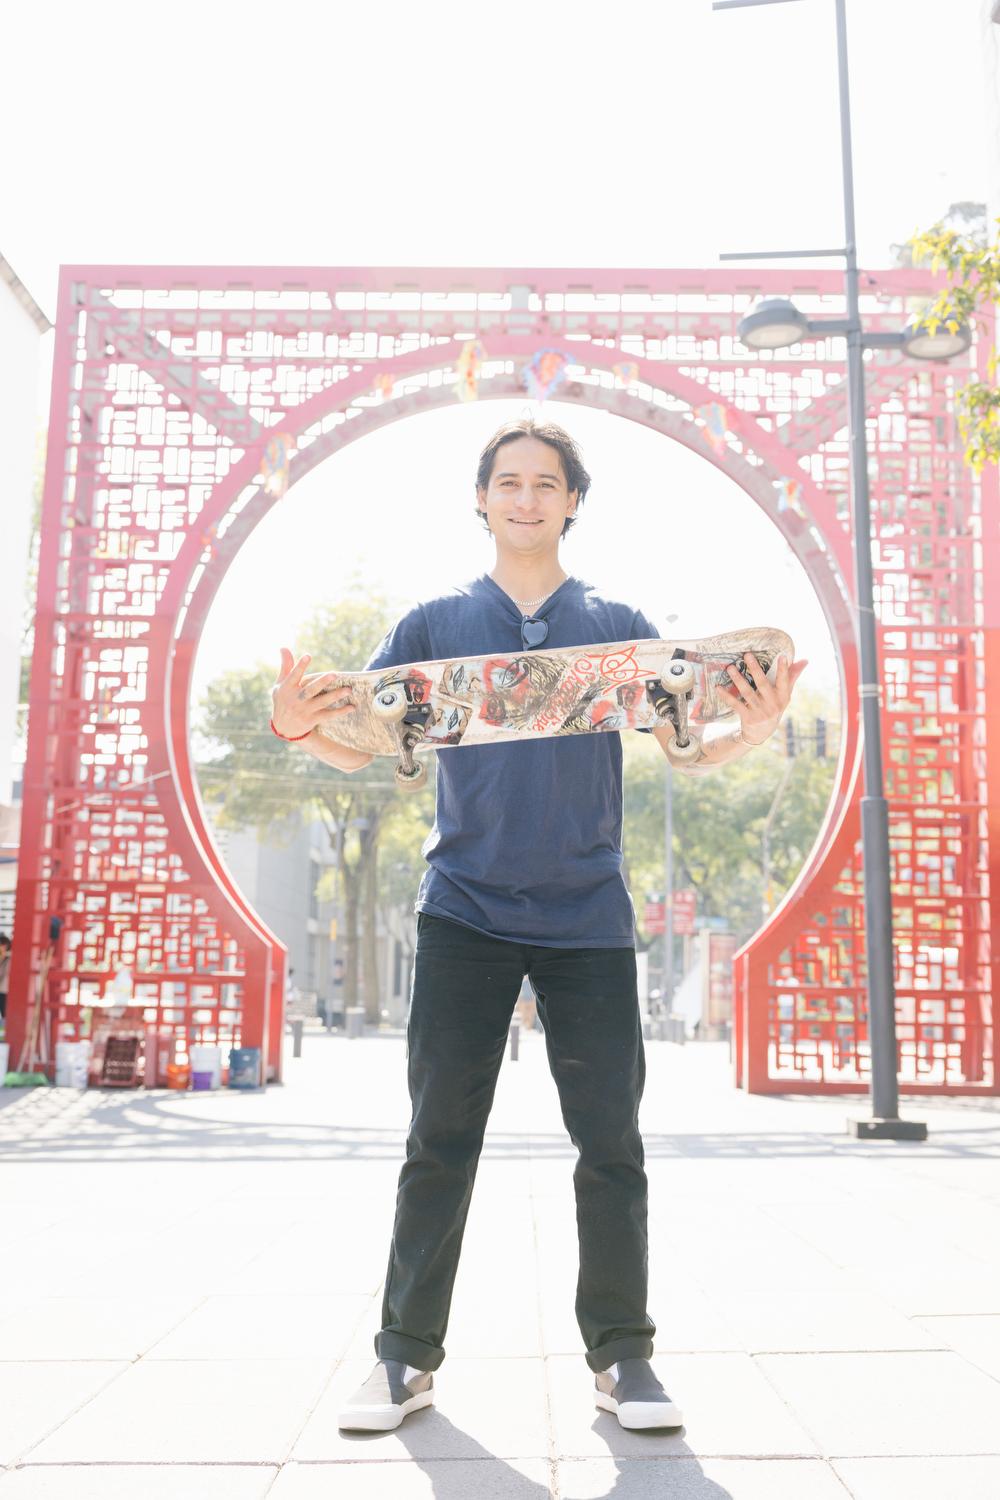 Mexico City, Mexico. January 9, 2021. Oscar Meza, a pro skateboarder and Olympic qualifier, poses...